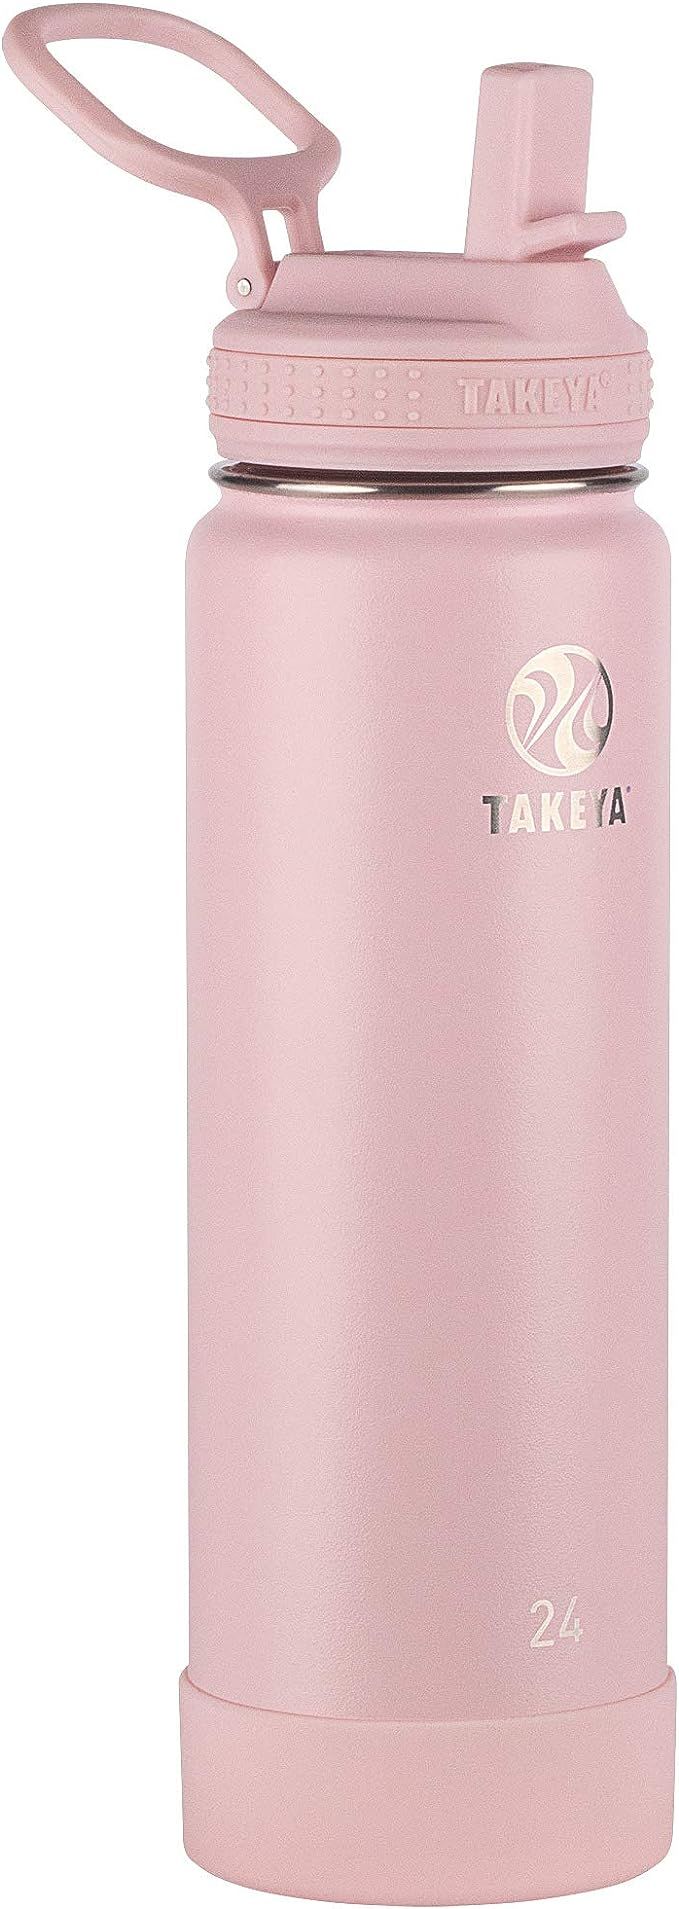 Takeya - 51221 Takeya Actives Insulated Stainless Steel Water Bottle with Straw Lid, 24 oz, Blush | Amazon (US)